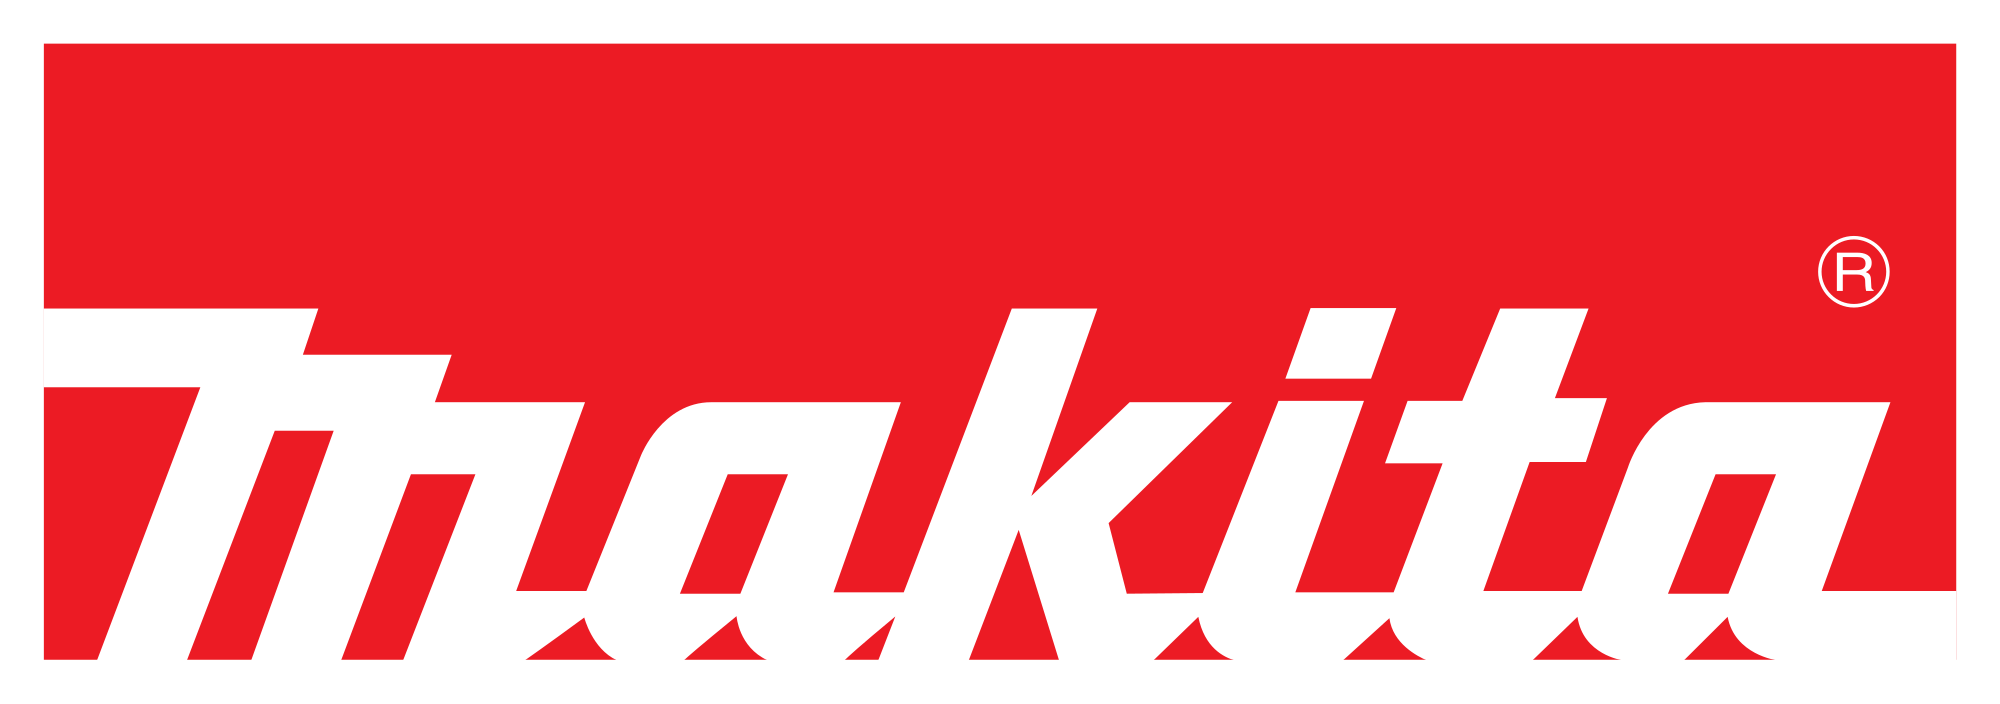 2000px-Makita_Logo.svg